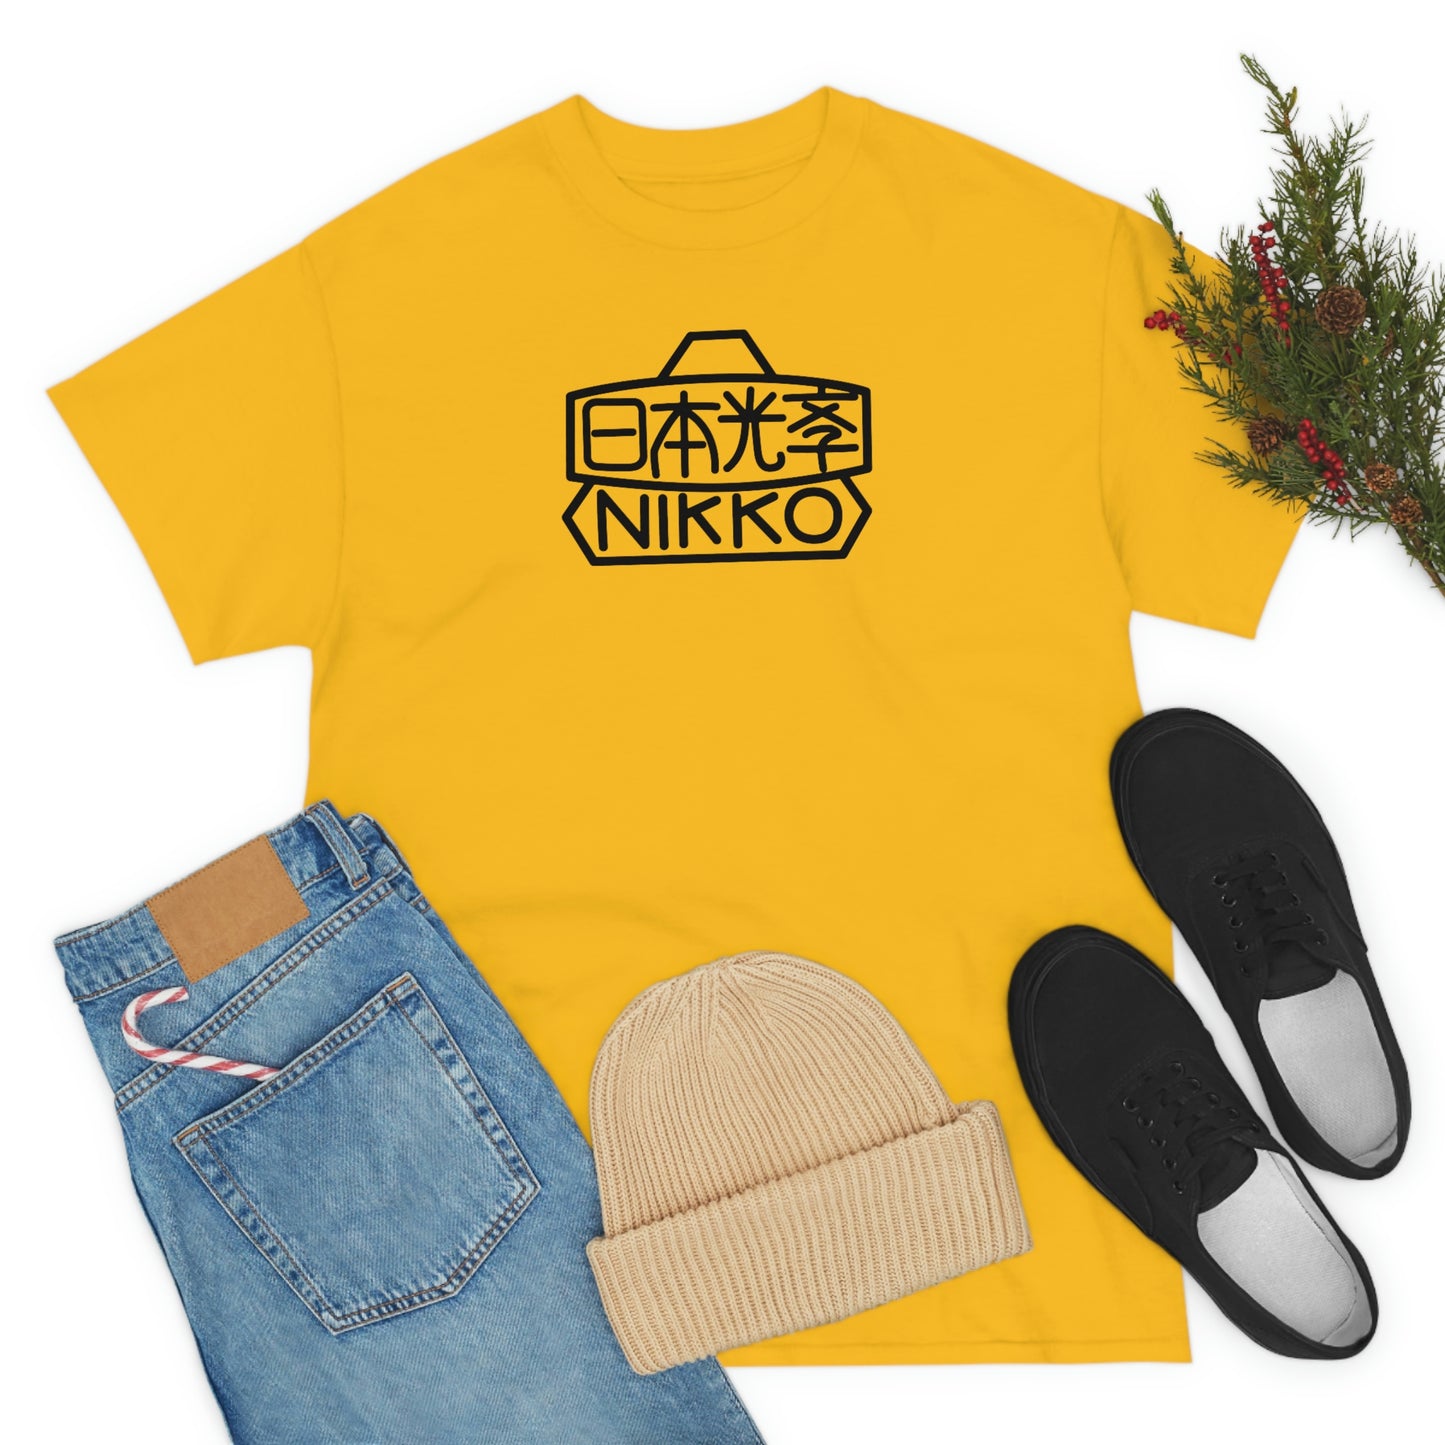 Nikko (Nikon) T-Shirt